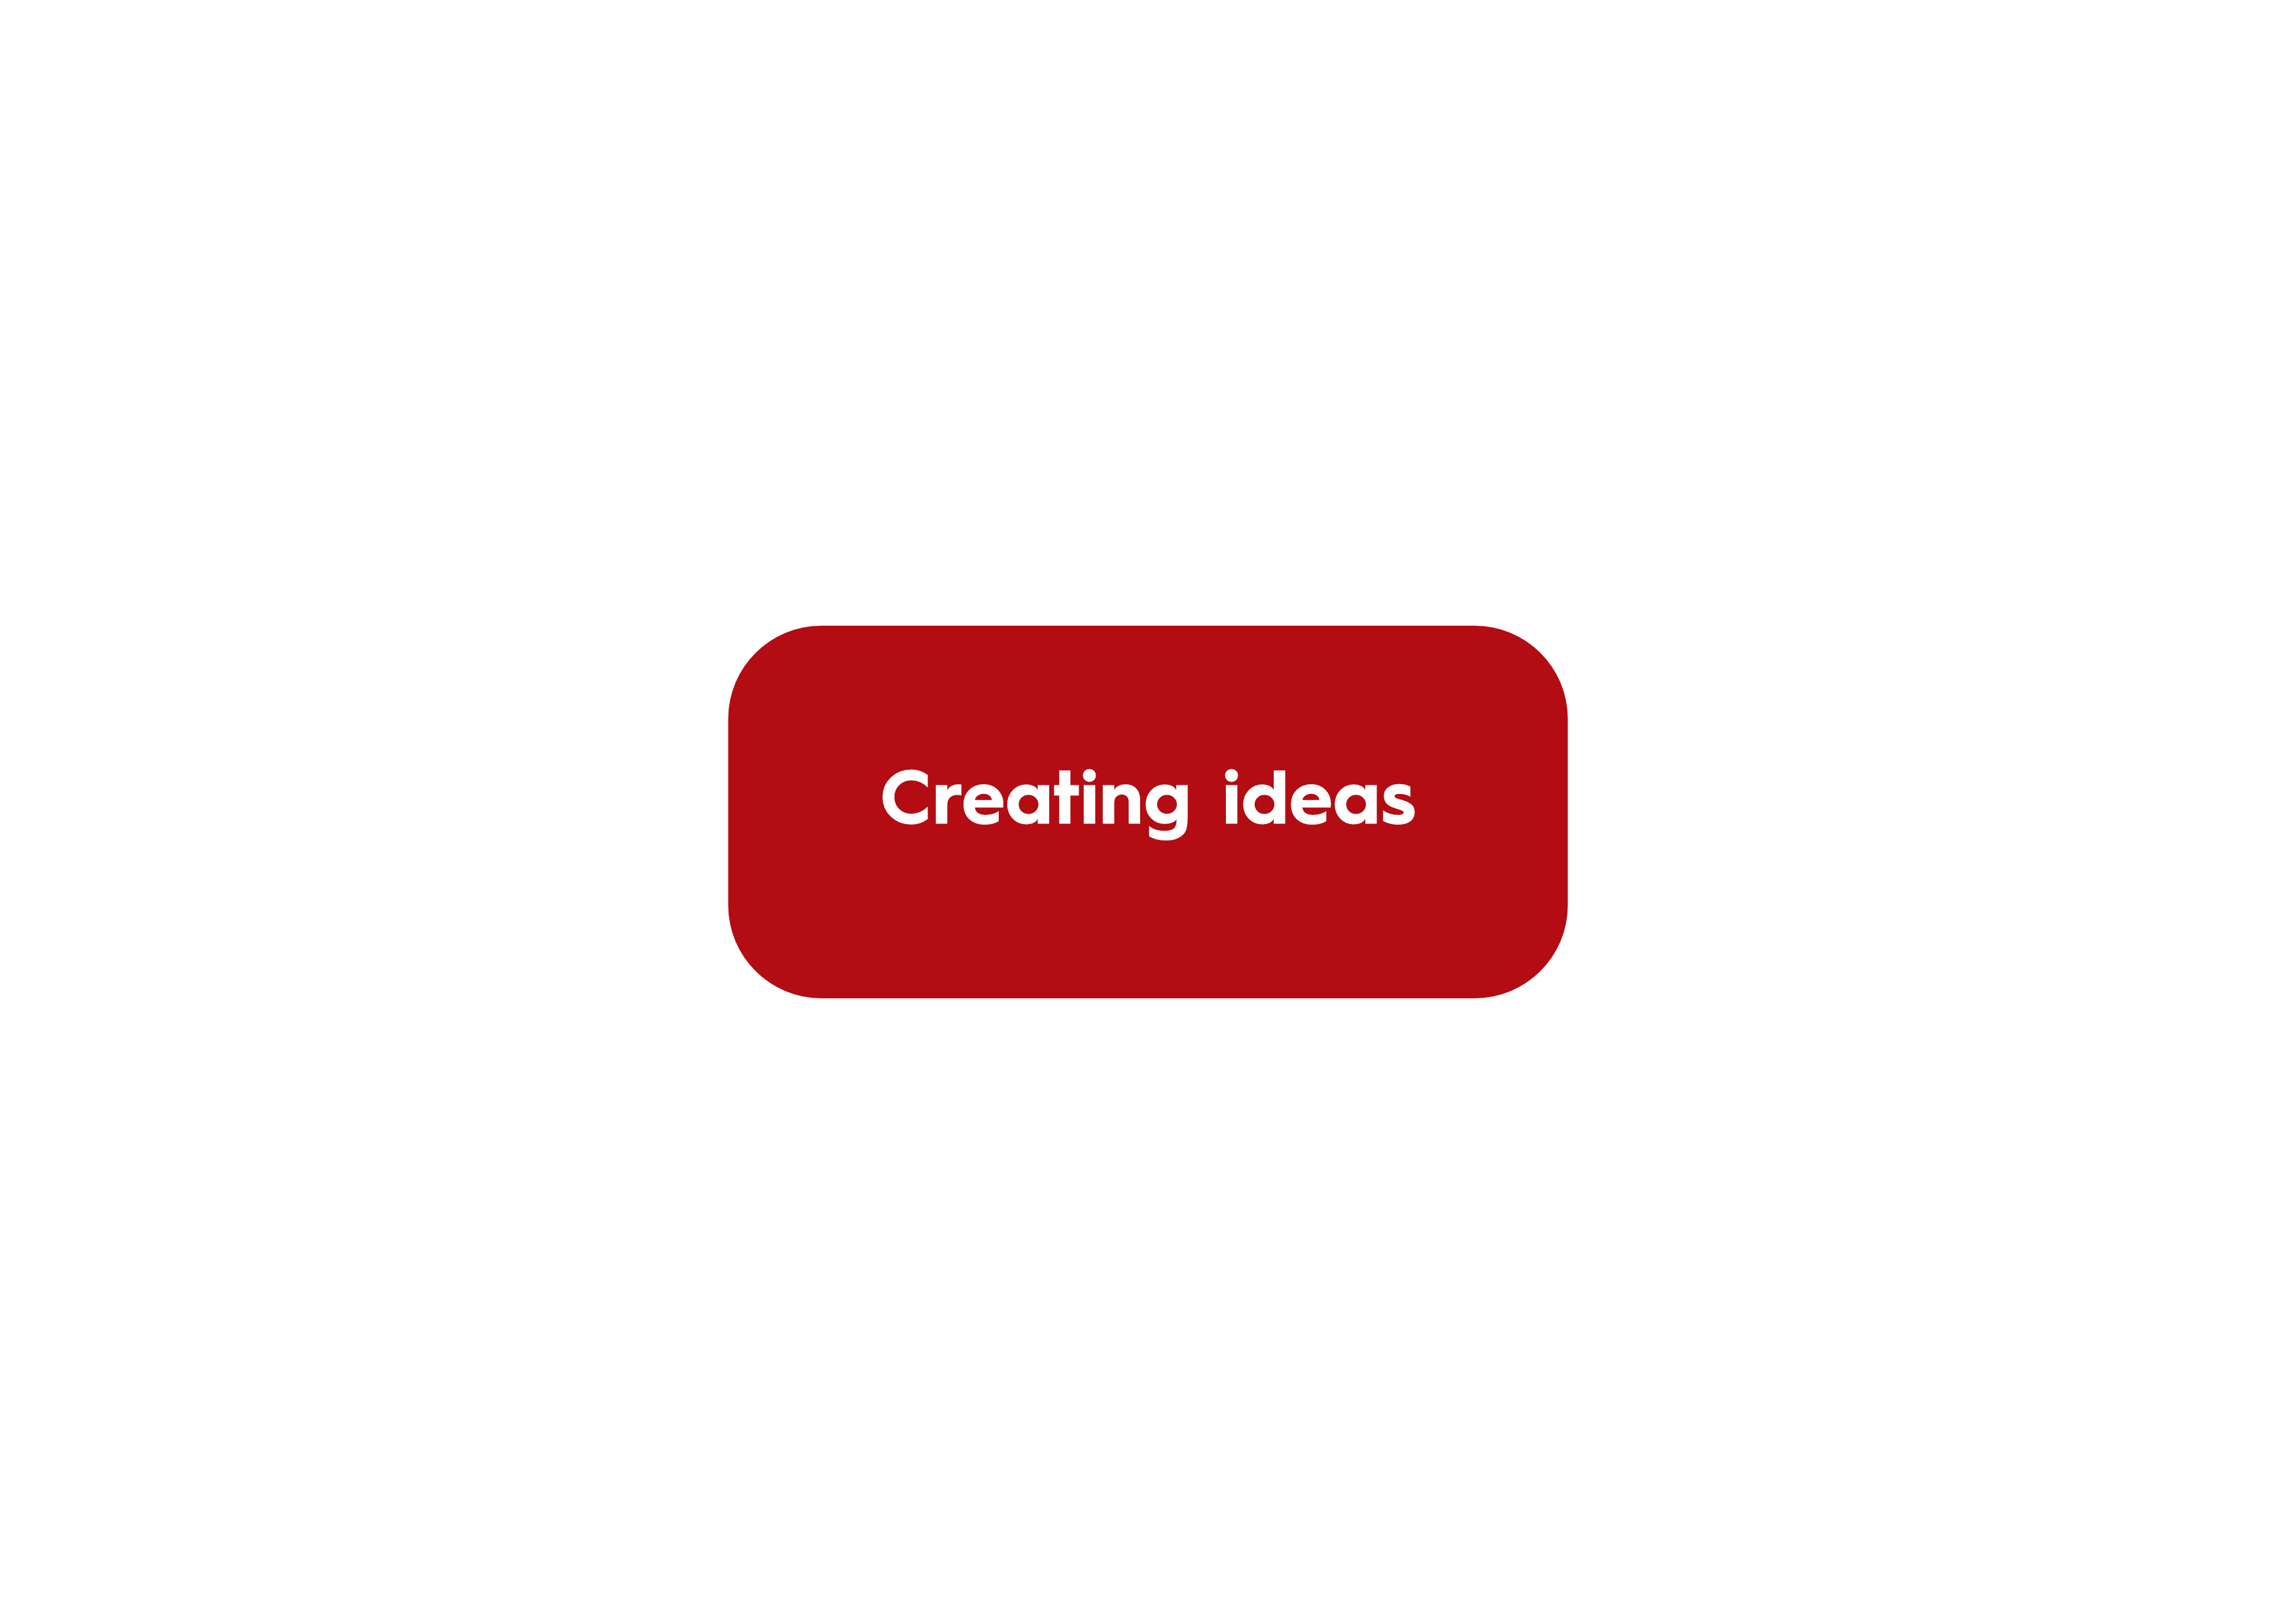 Creating ideas